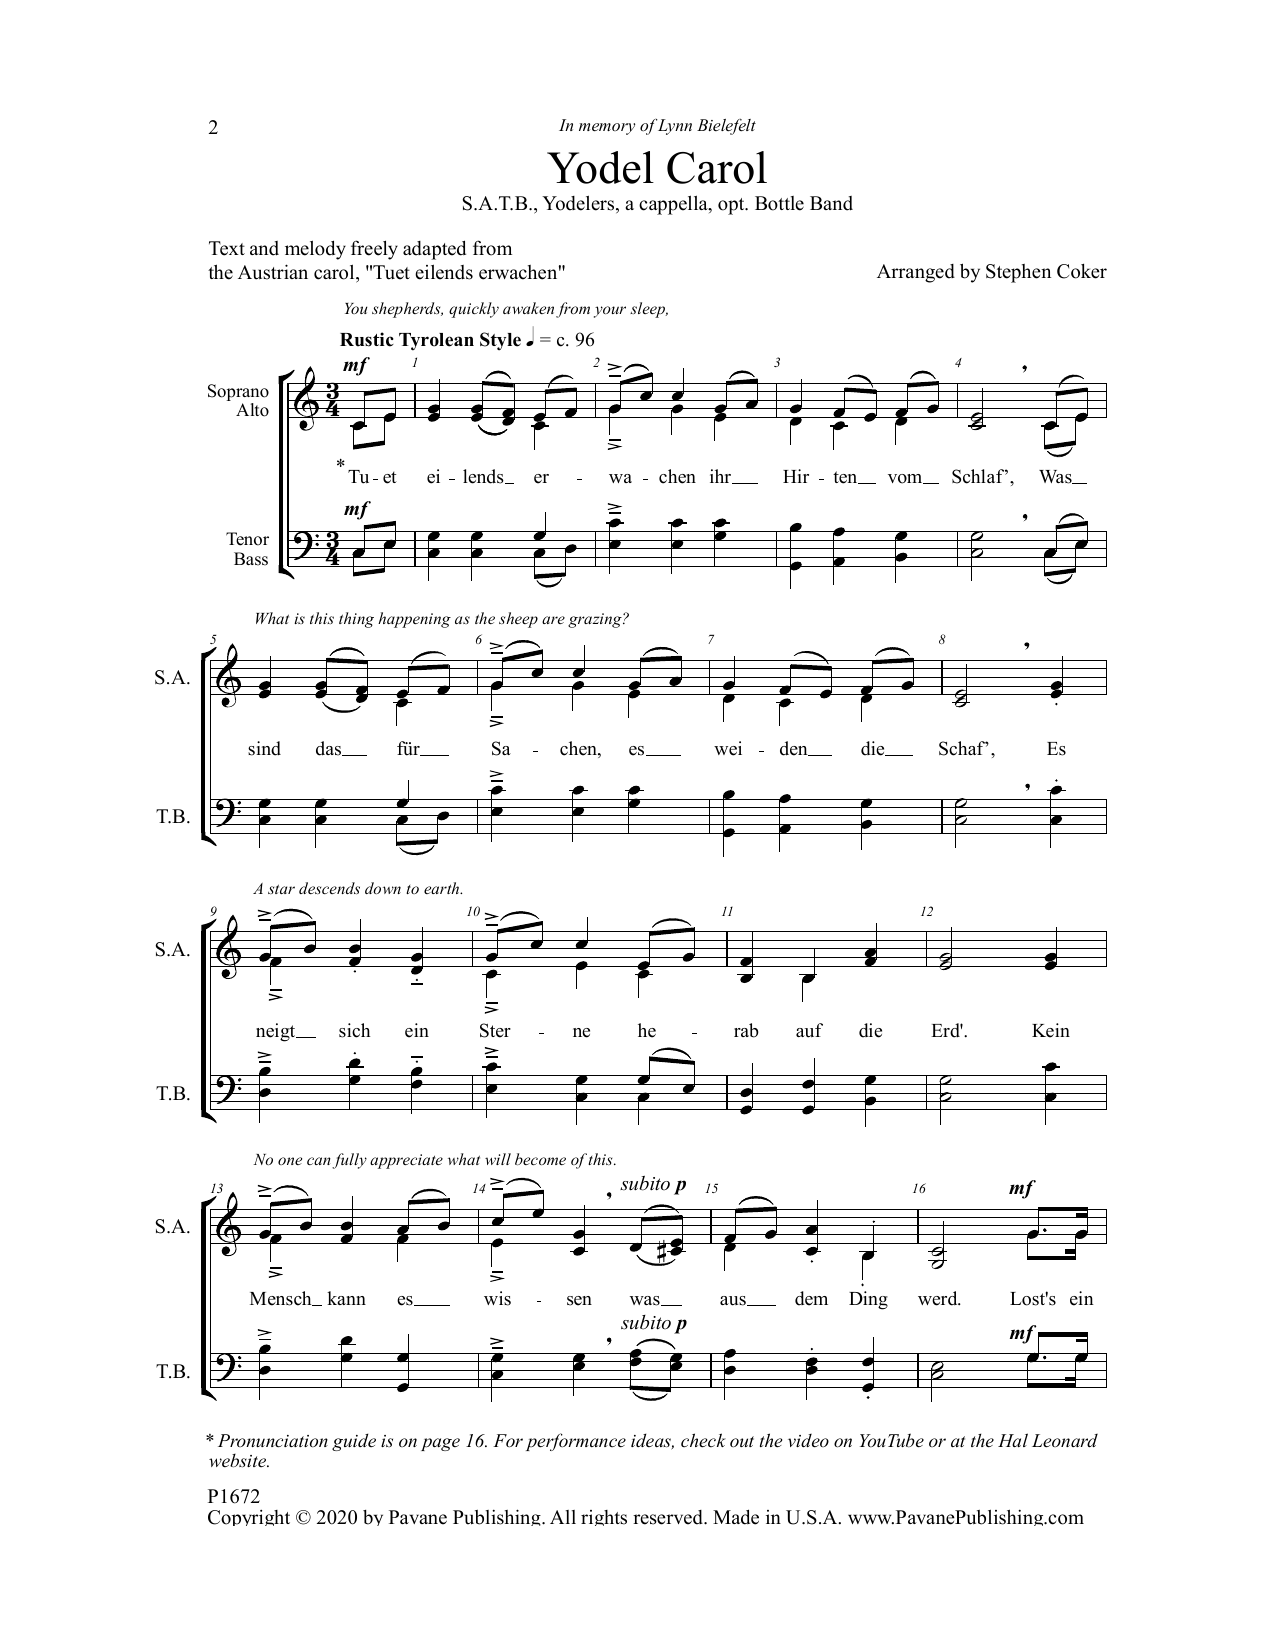 Stephen Coker Yodel Carol Sheet Music Notes & Chords for SATB Choir - Download or Print PDF